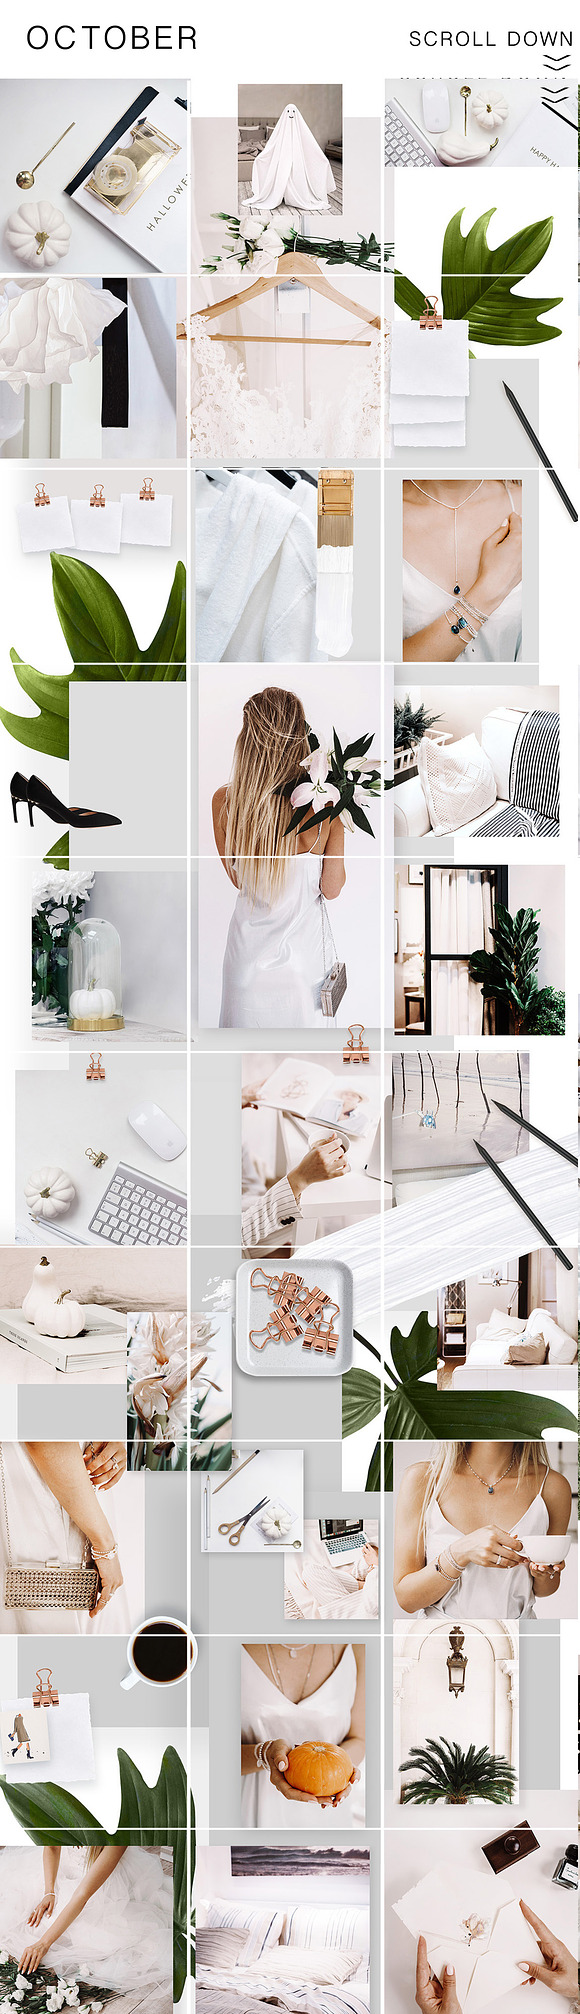 PHOTOS $ PUZZLE. MEGA BUNDLE. in Instagram Templates - product preview 10